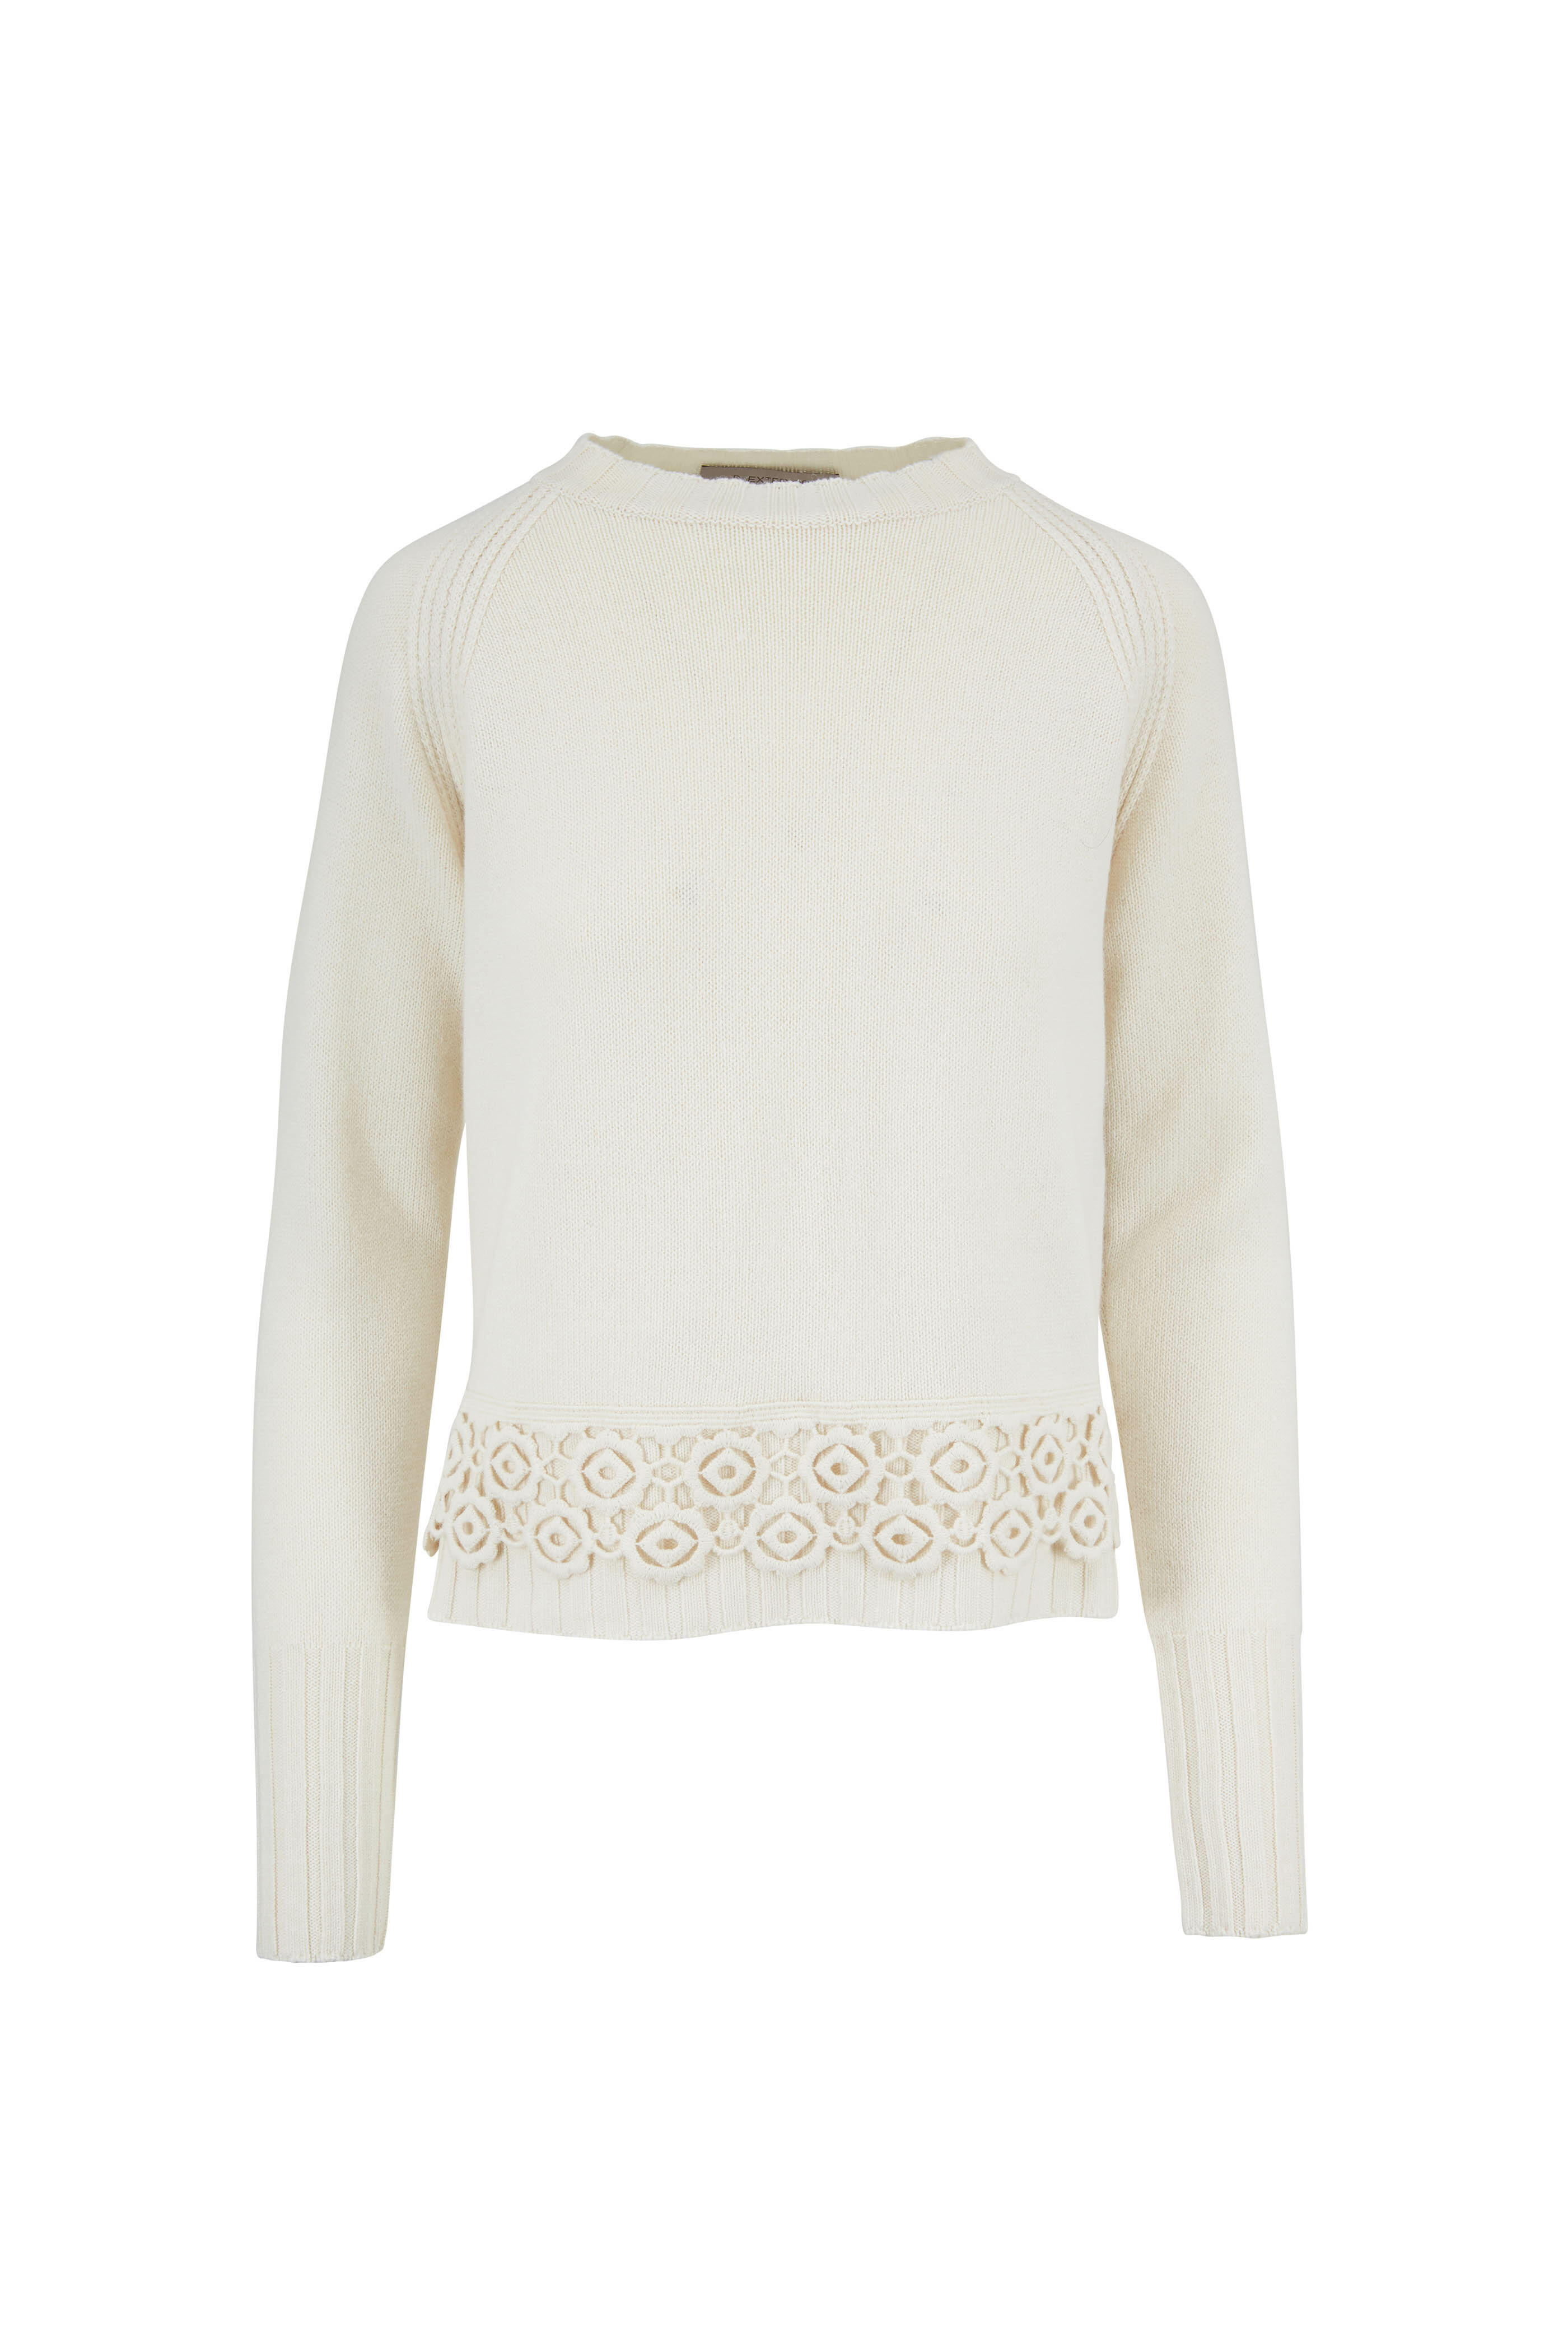 D.Exterior - Cream Wool, Cashmere & Silk Macrame Trim Sweater